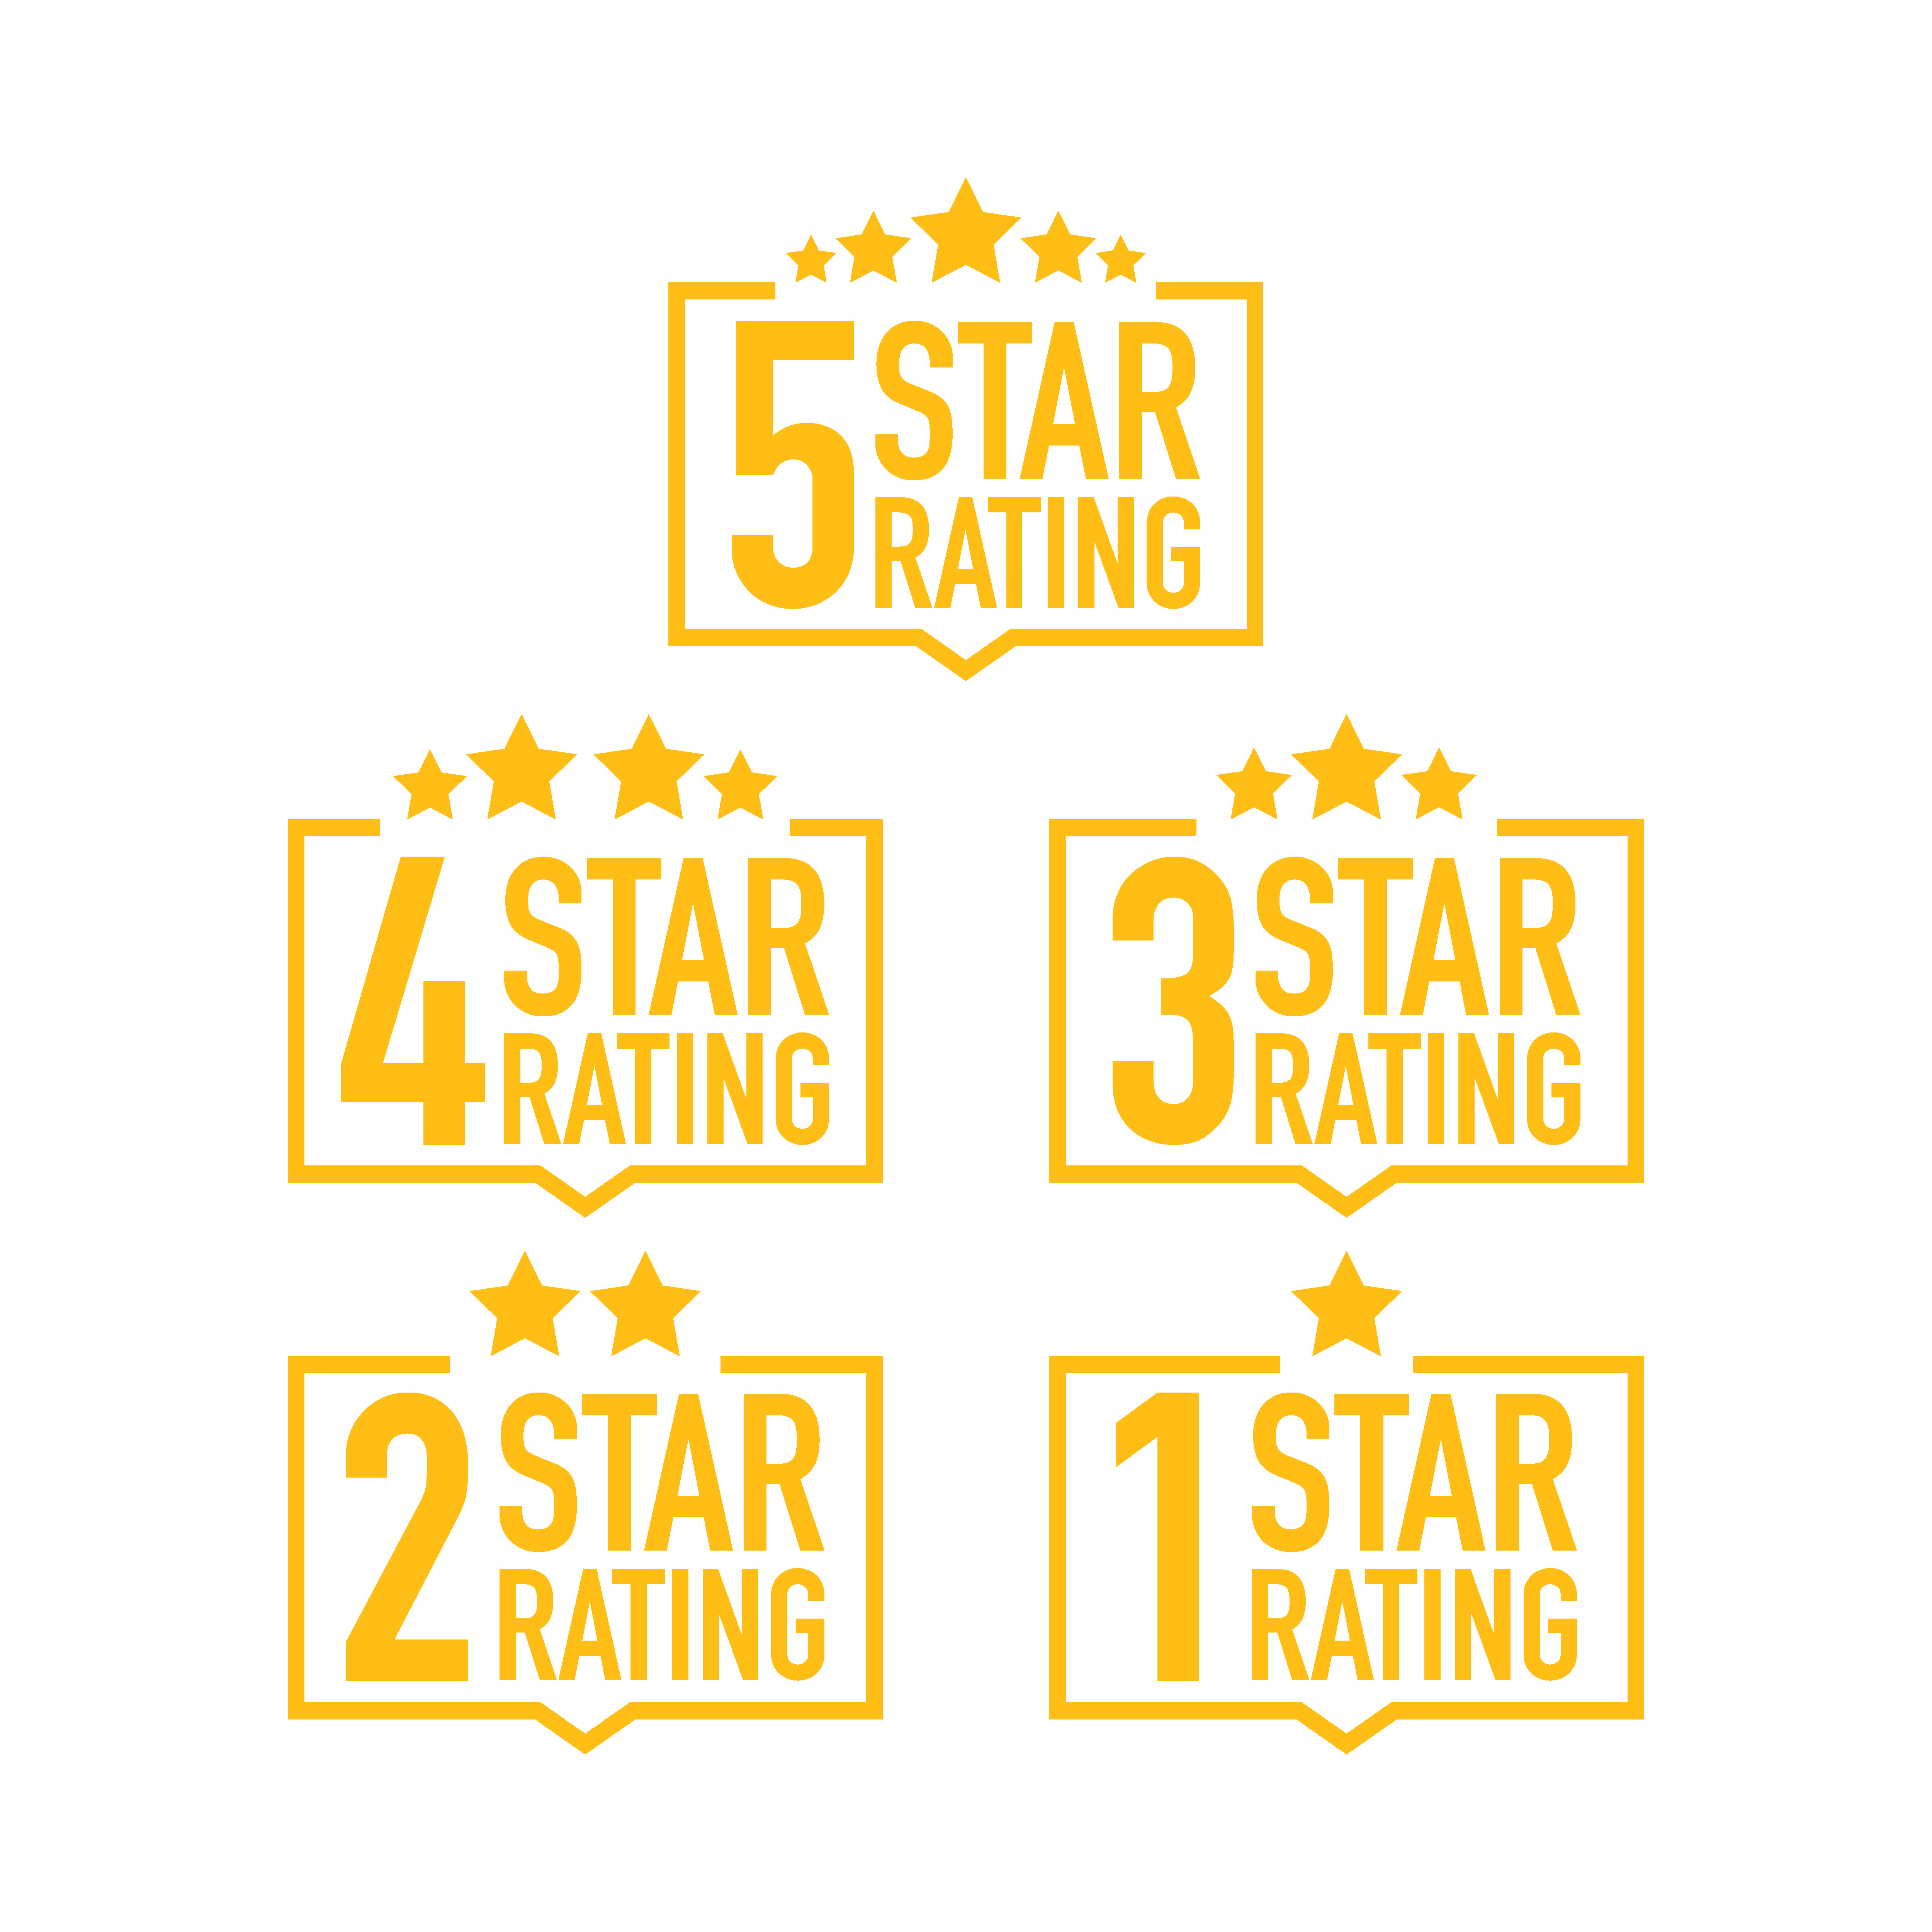 star rating image